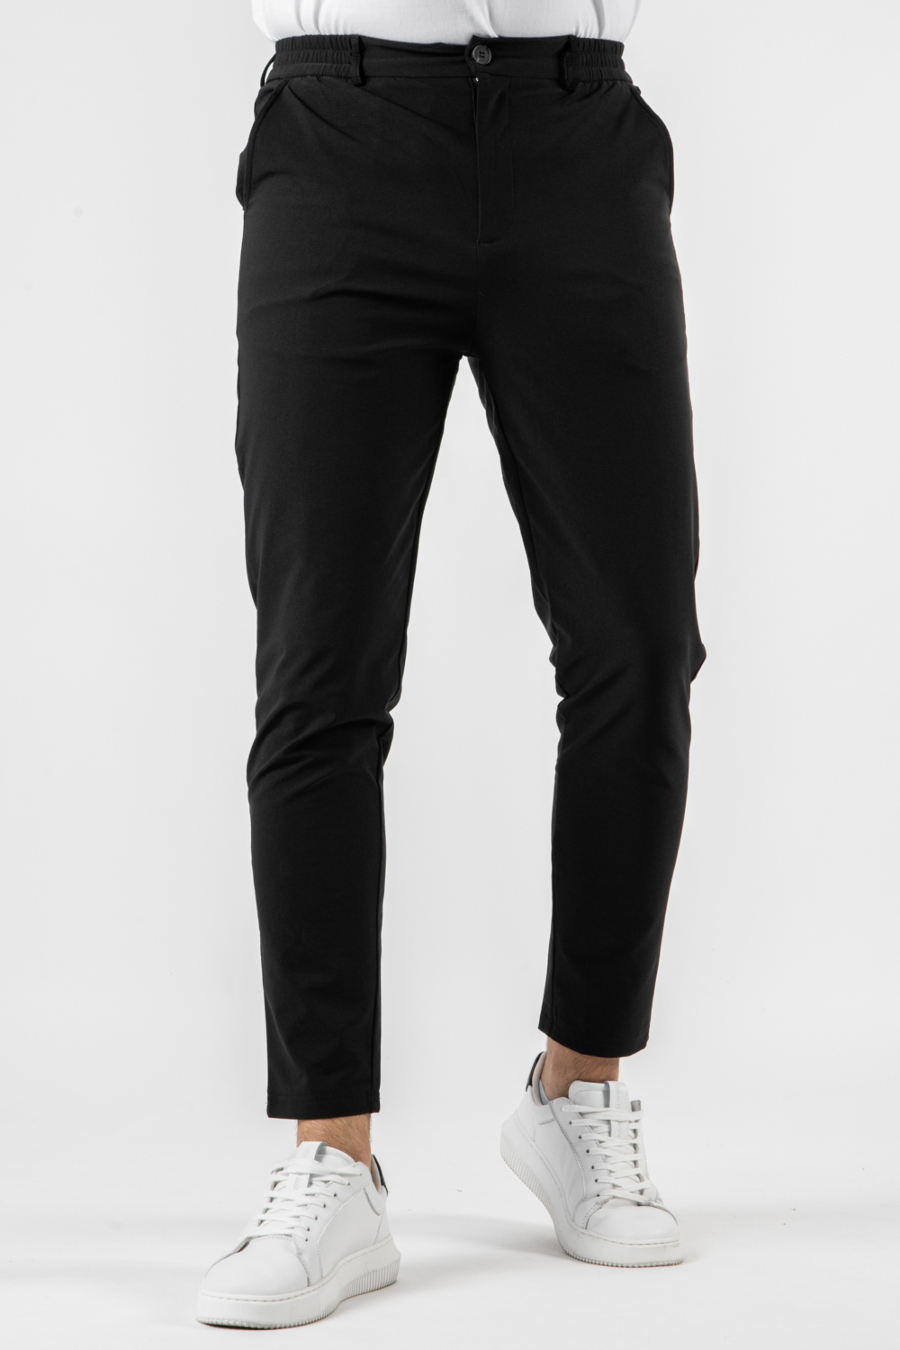 Moške hlače FR-BM2023-1, črne